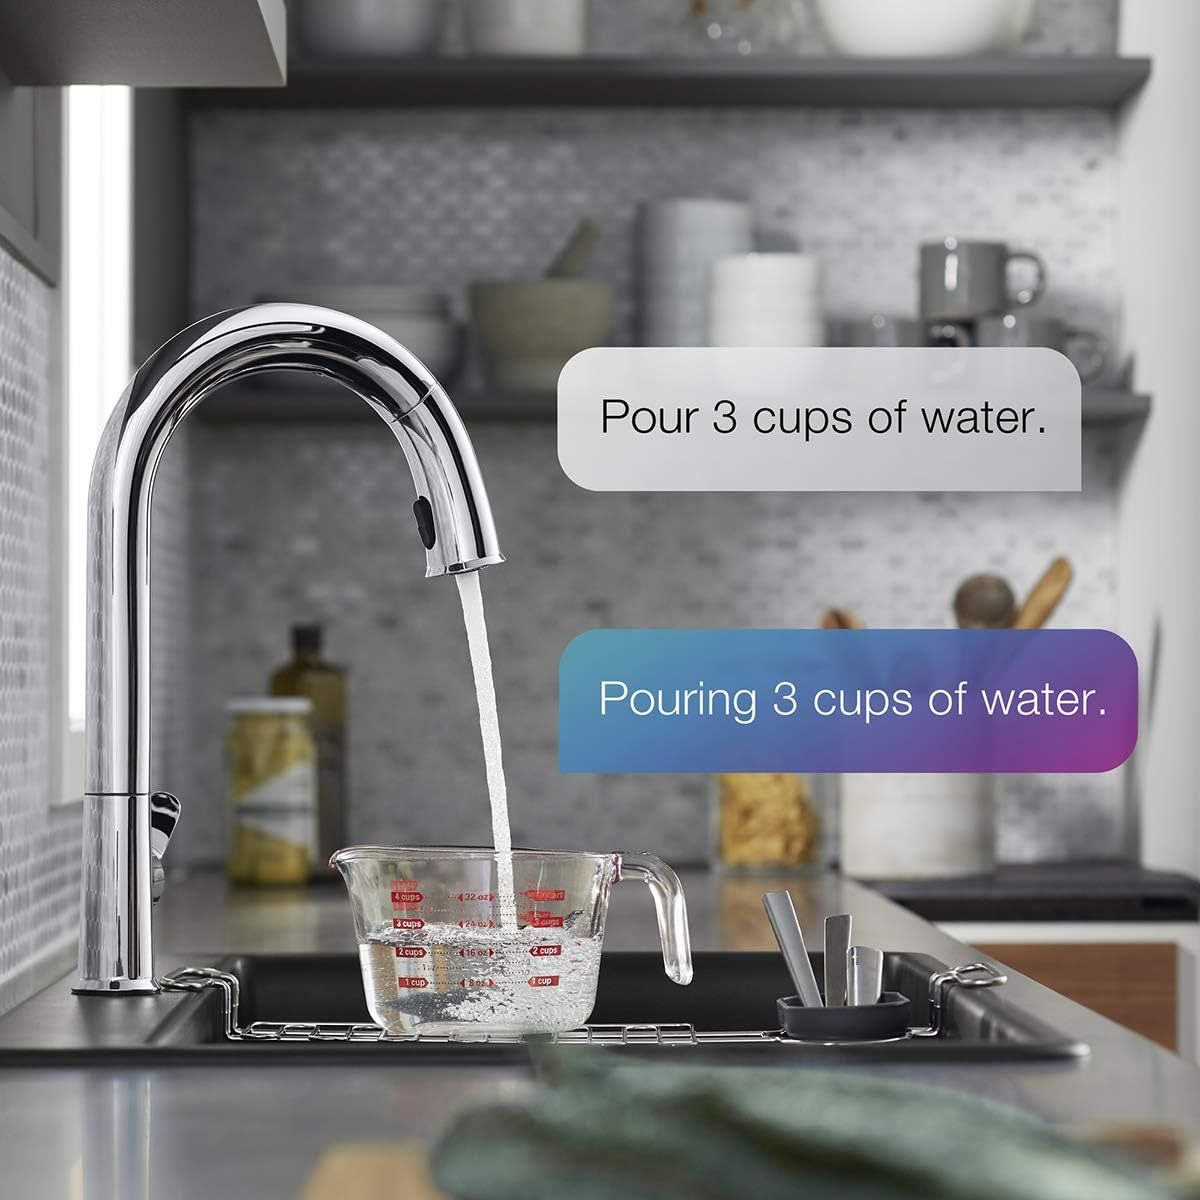 the kohler k-72218-wb-vs sensate kitchen faucet controlled by voice